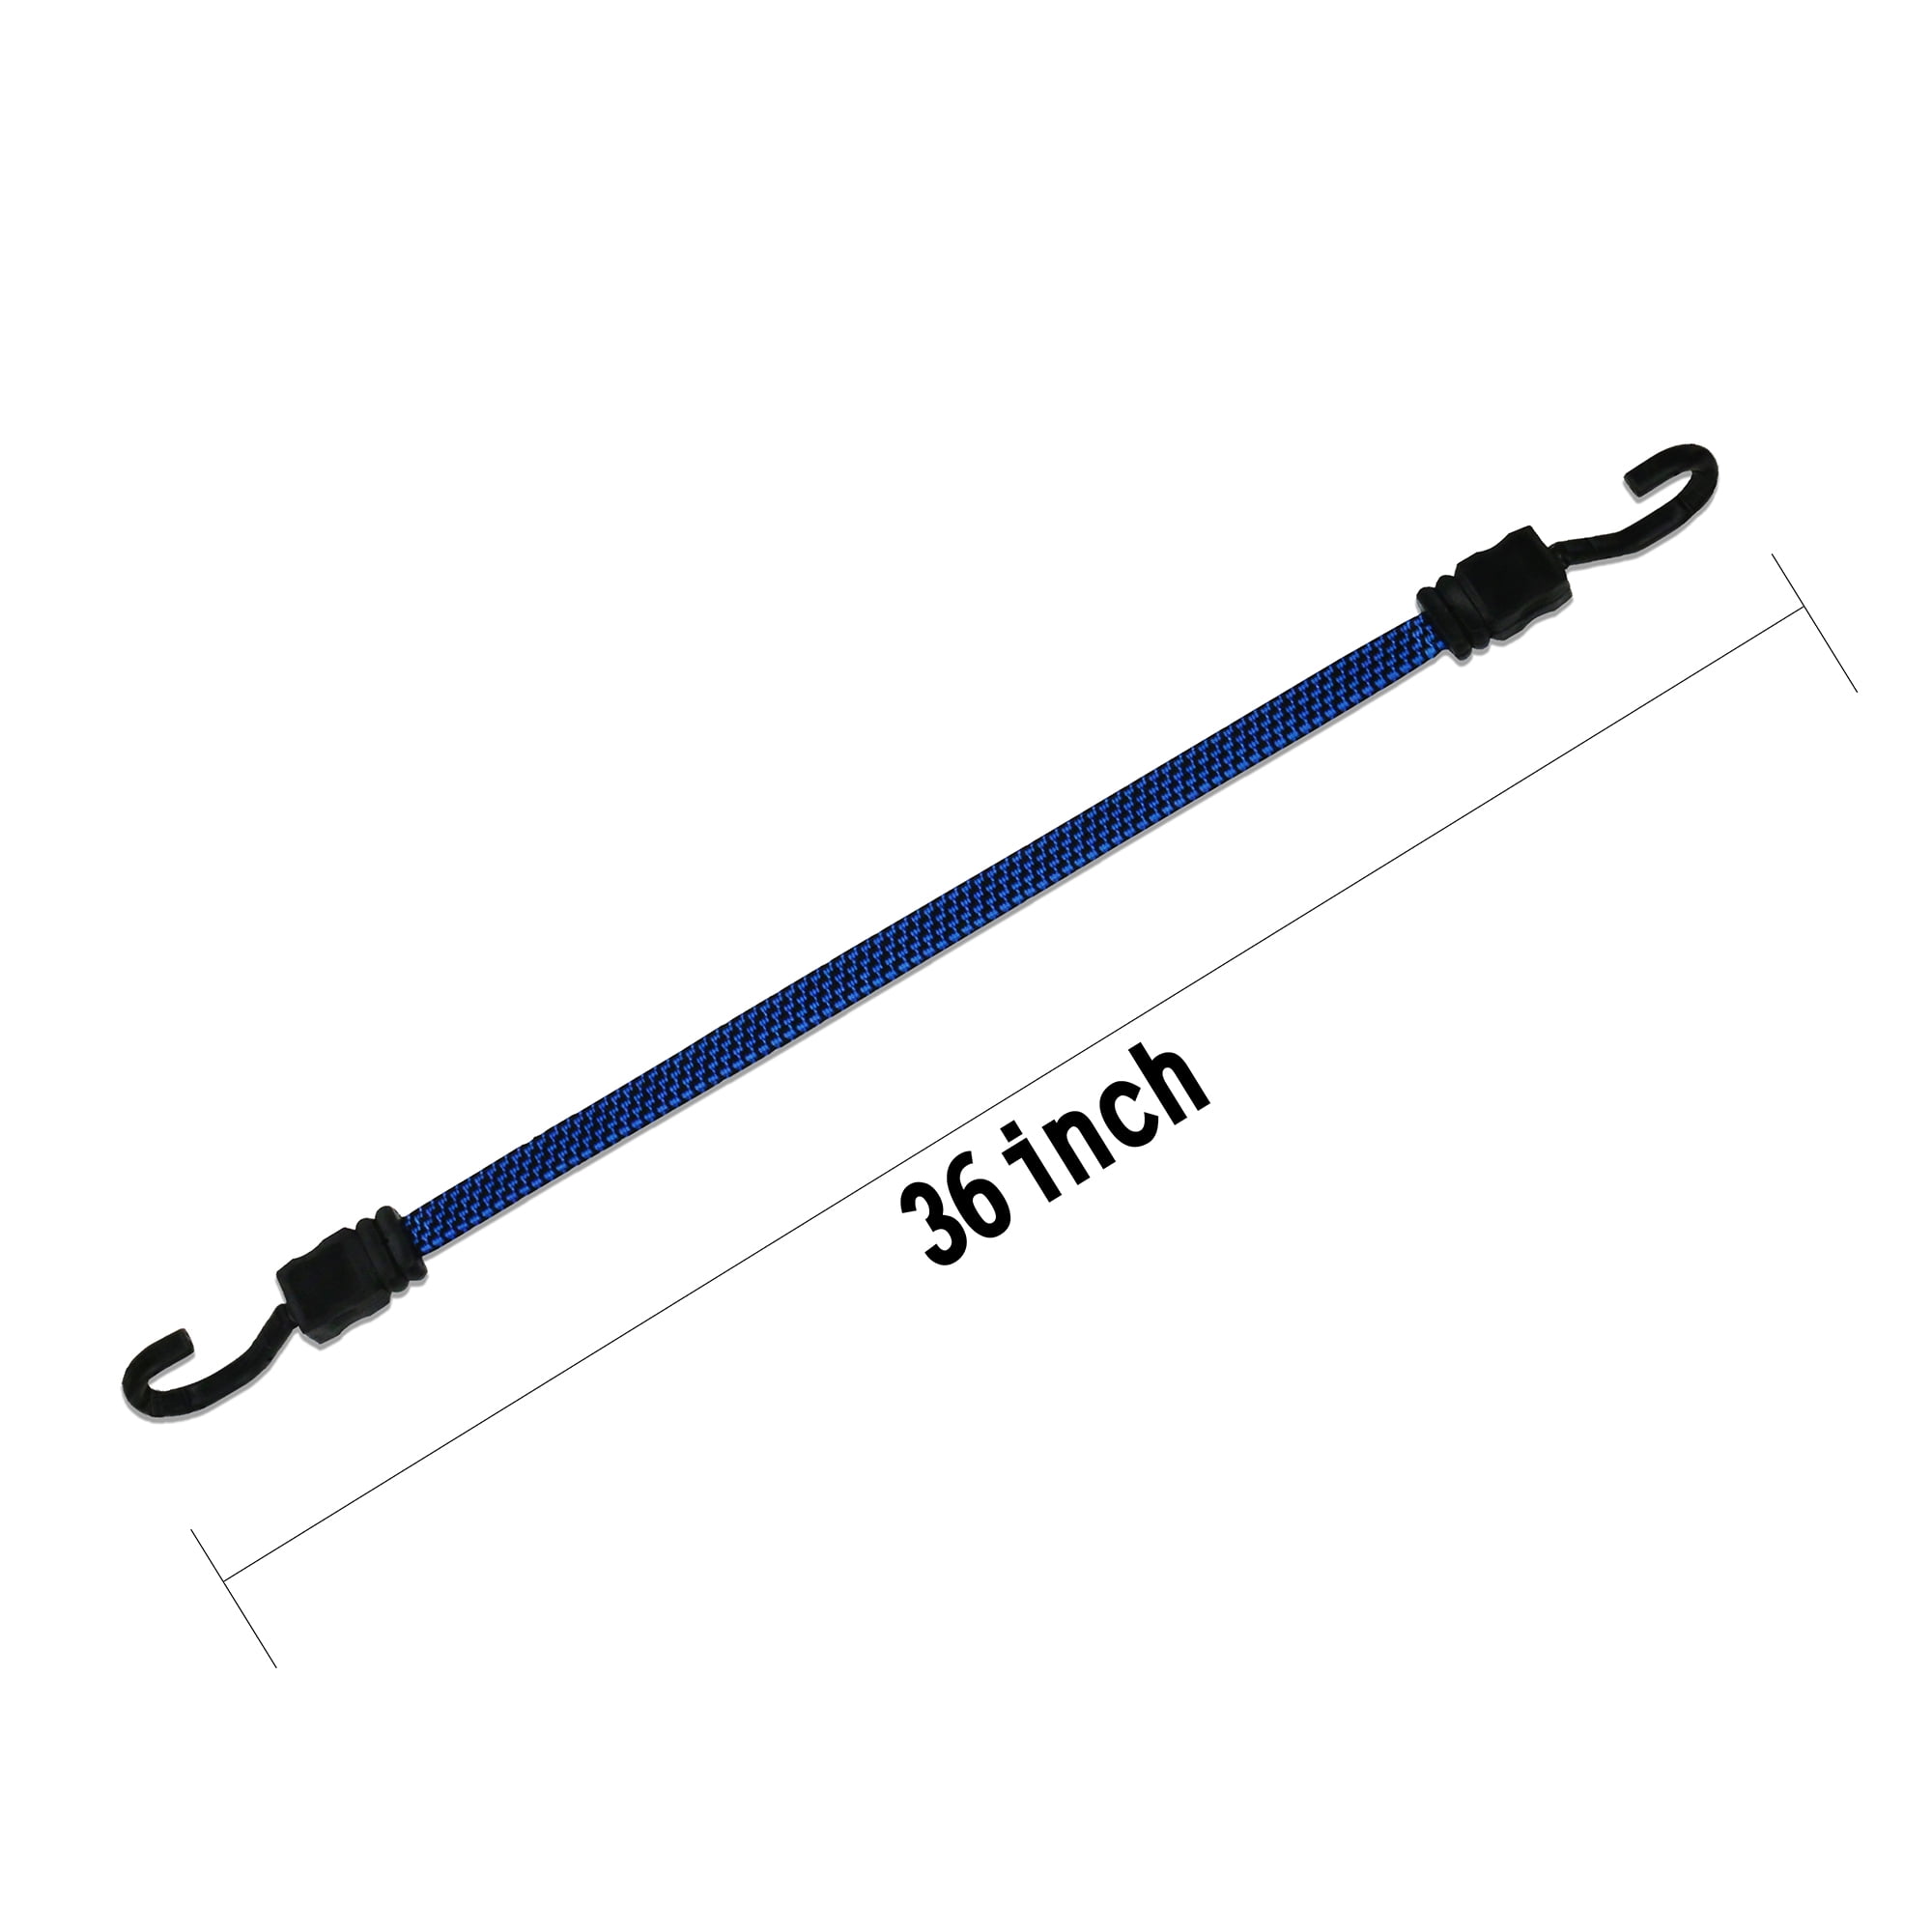 36-inch (914 mm) Six Arm Flex-Web Adjustable Bungee Cord, Blue